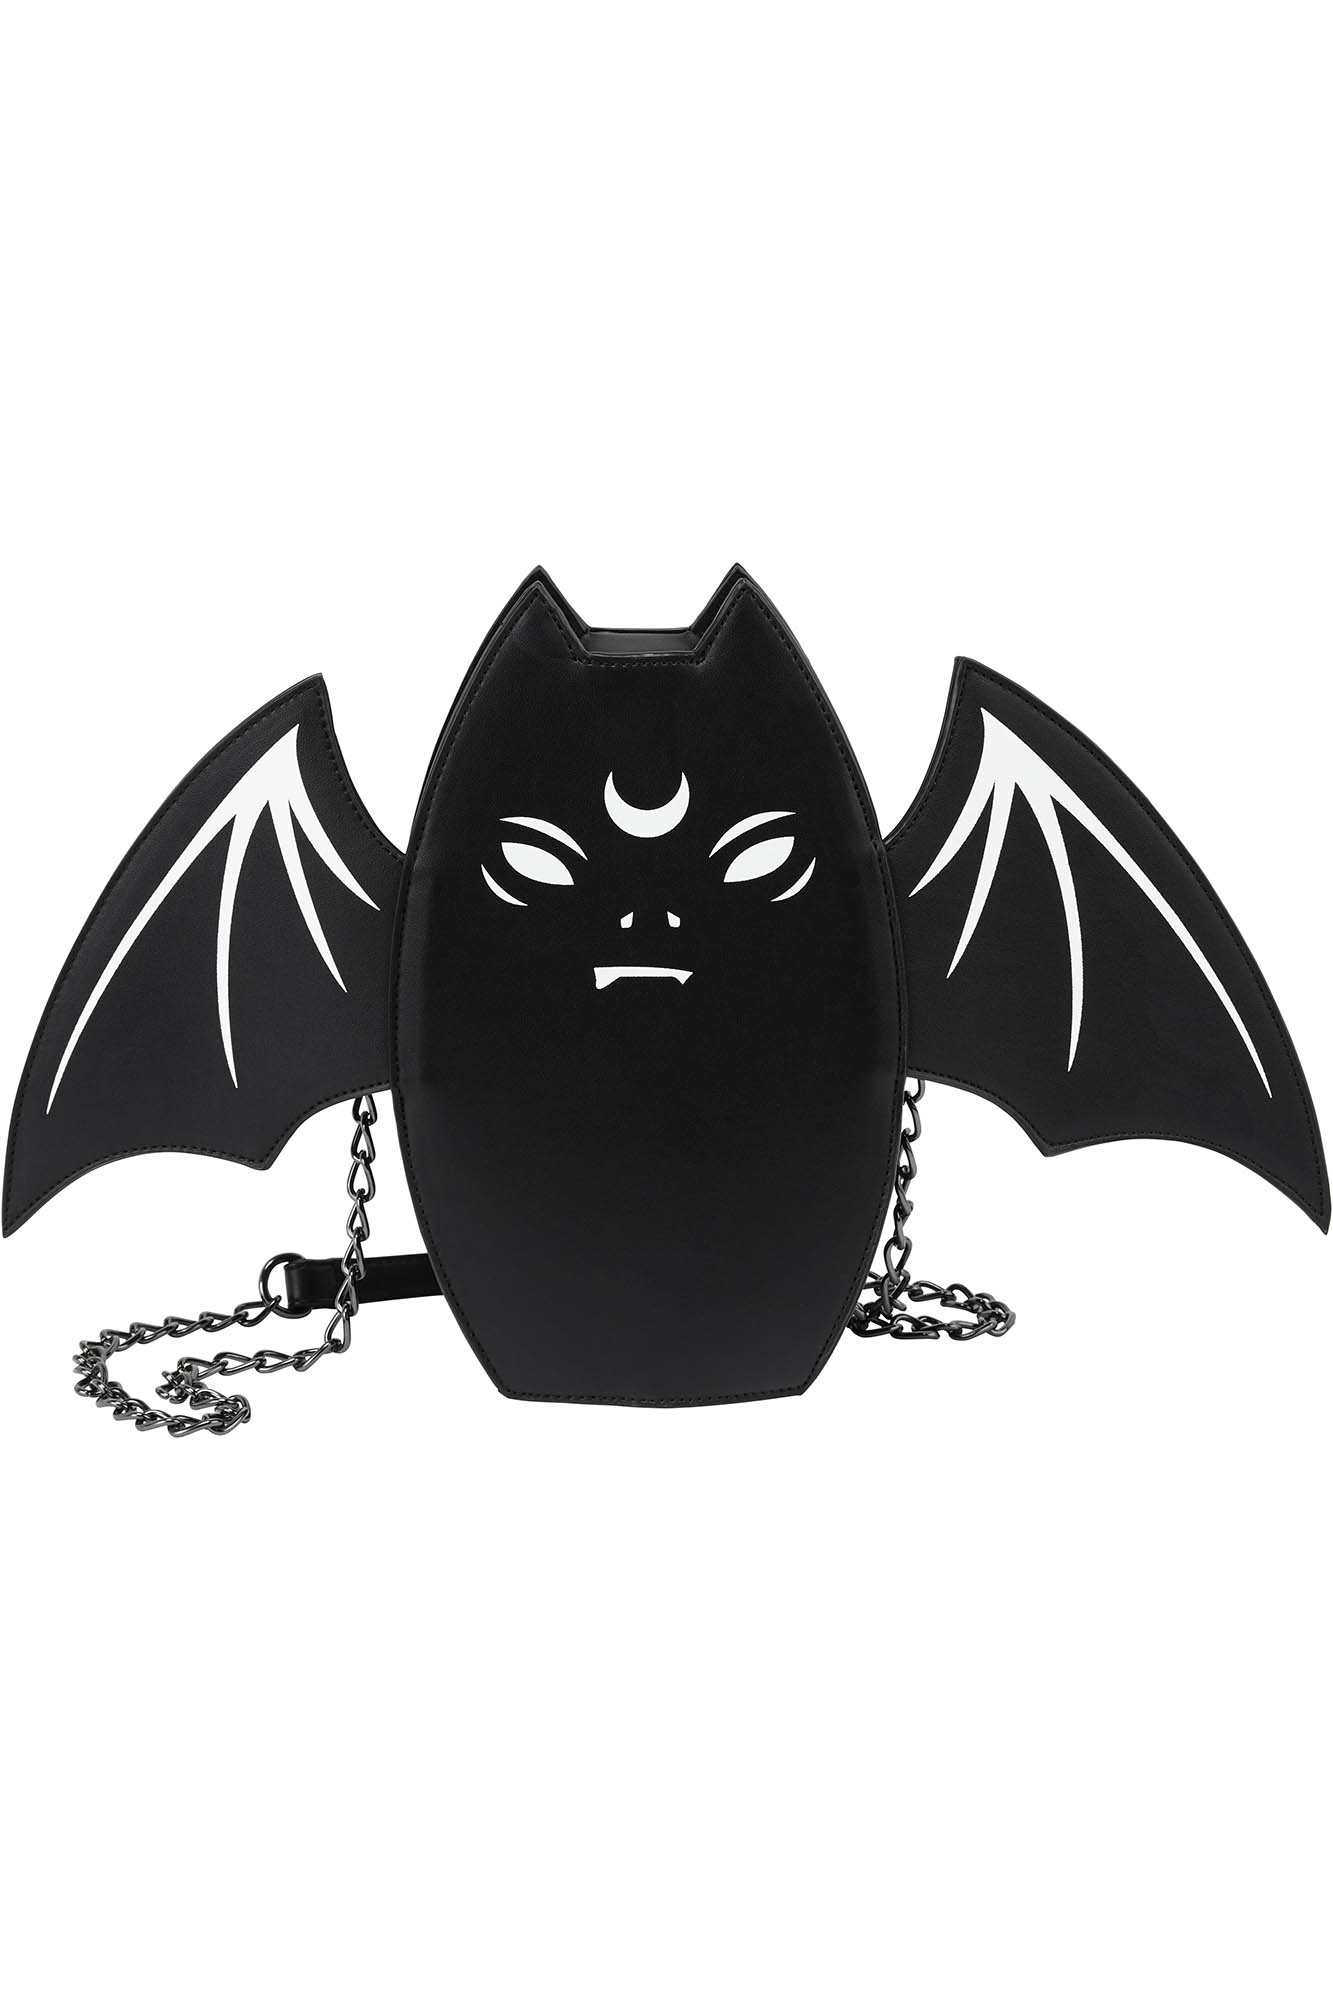 Grumpy Bat Handbag